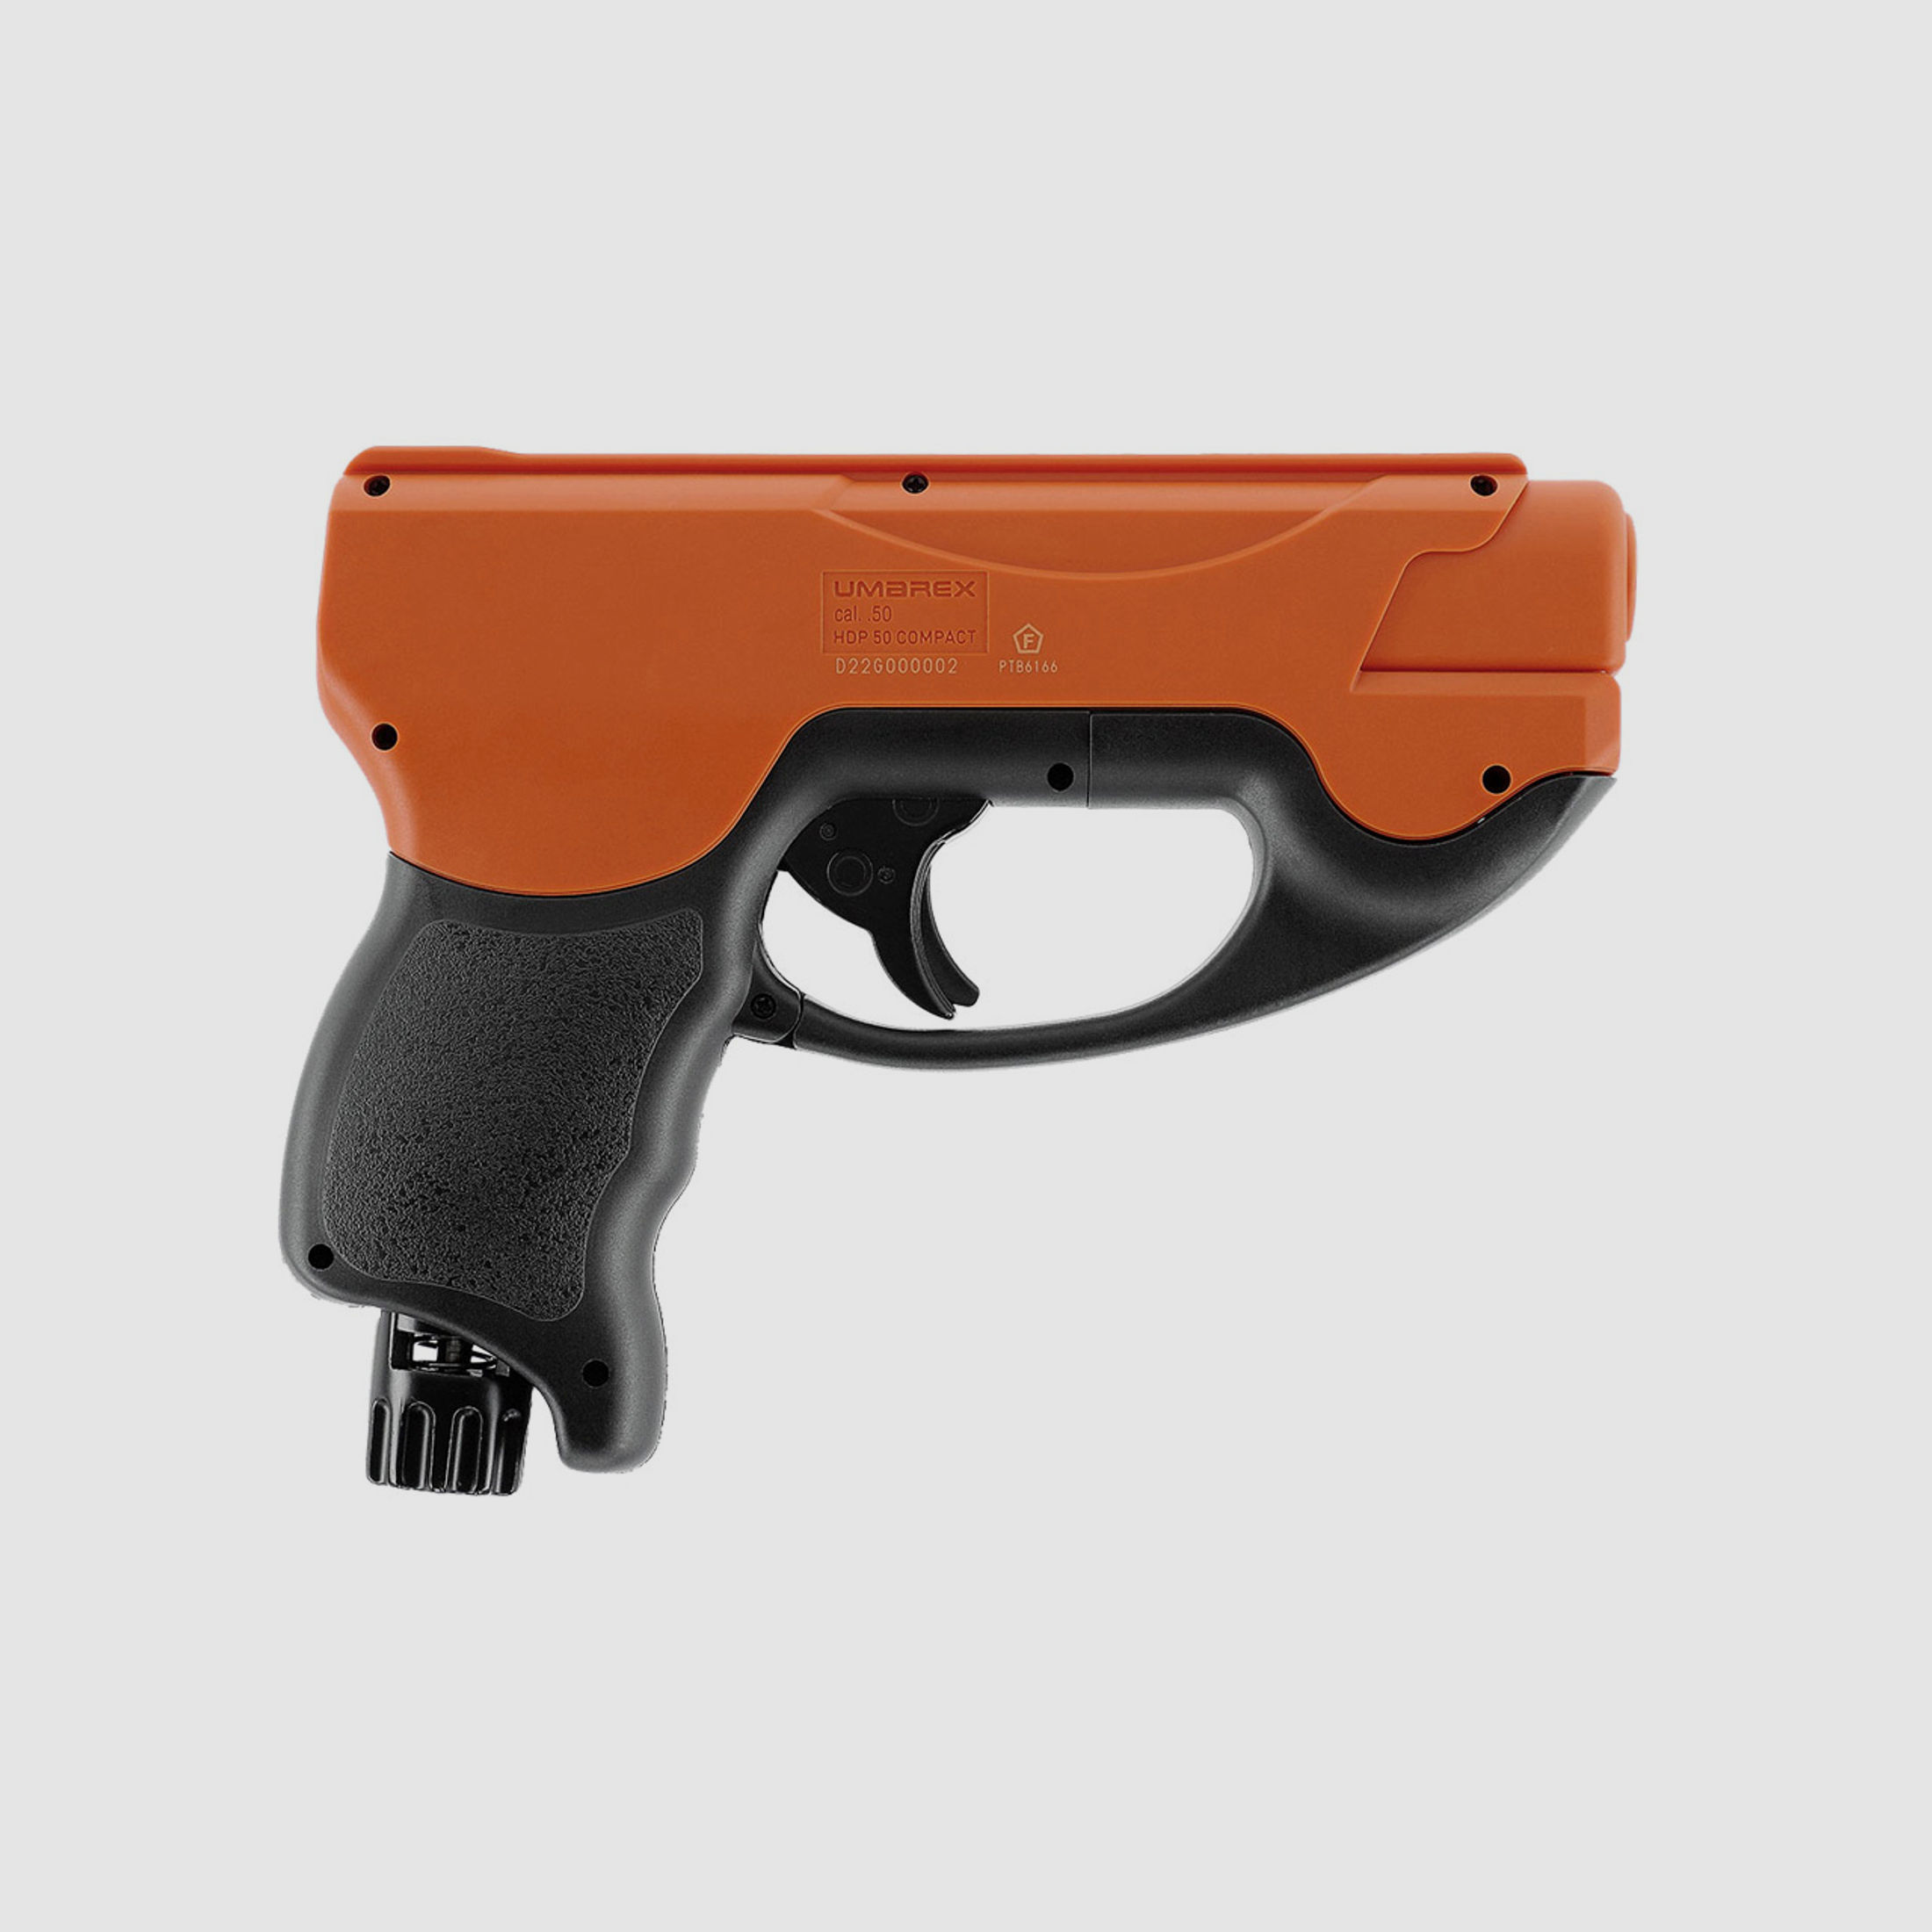 CO2 Markierer Home Defense Pistole Umarex P2P HDP 50 Compact u.a. fĂĽr Gummi-, Pfeffer- und Farbkugeln Kaliber .50 (P18)